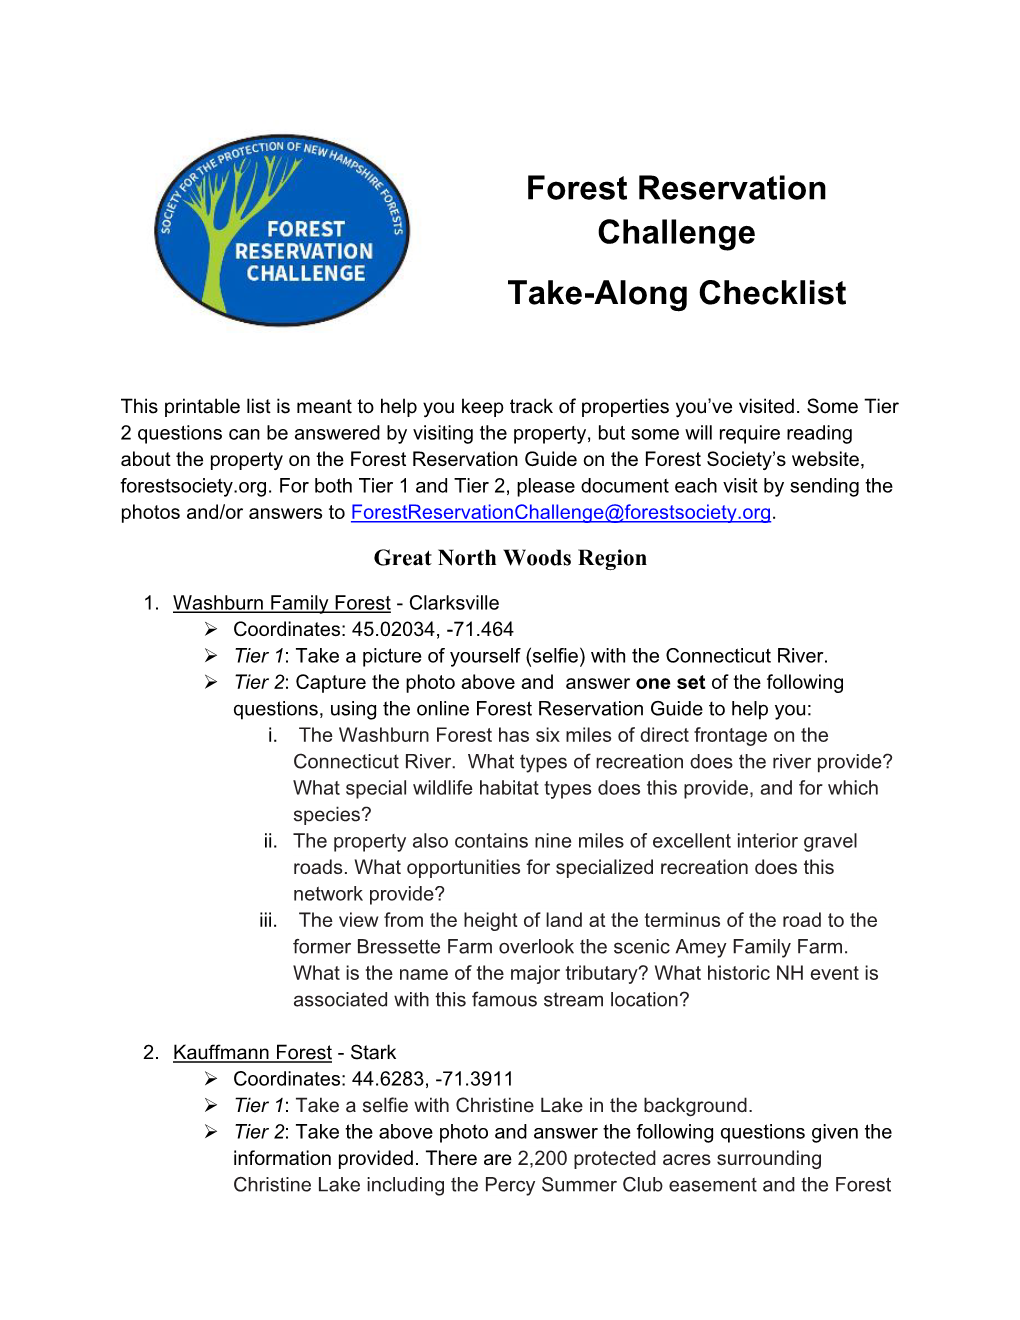 Forest Reservation Challenge Take-Along Checklist